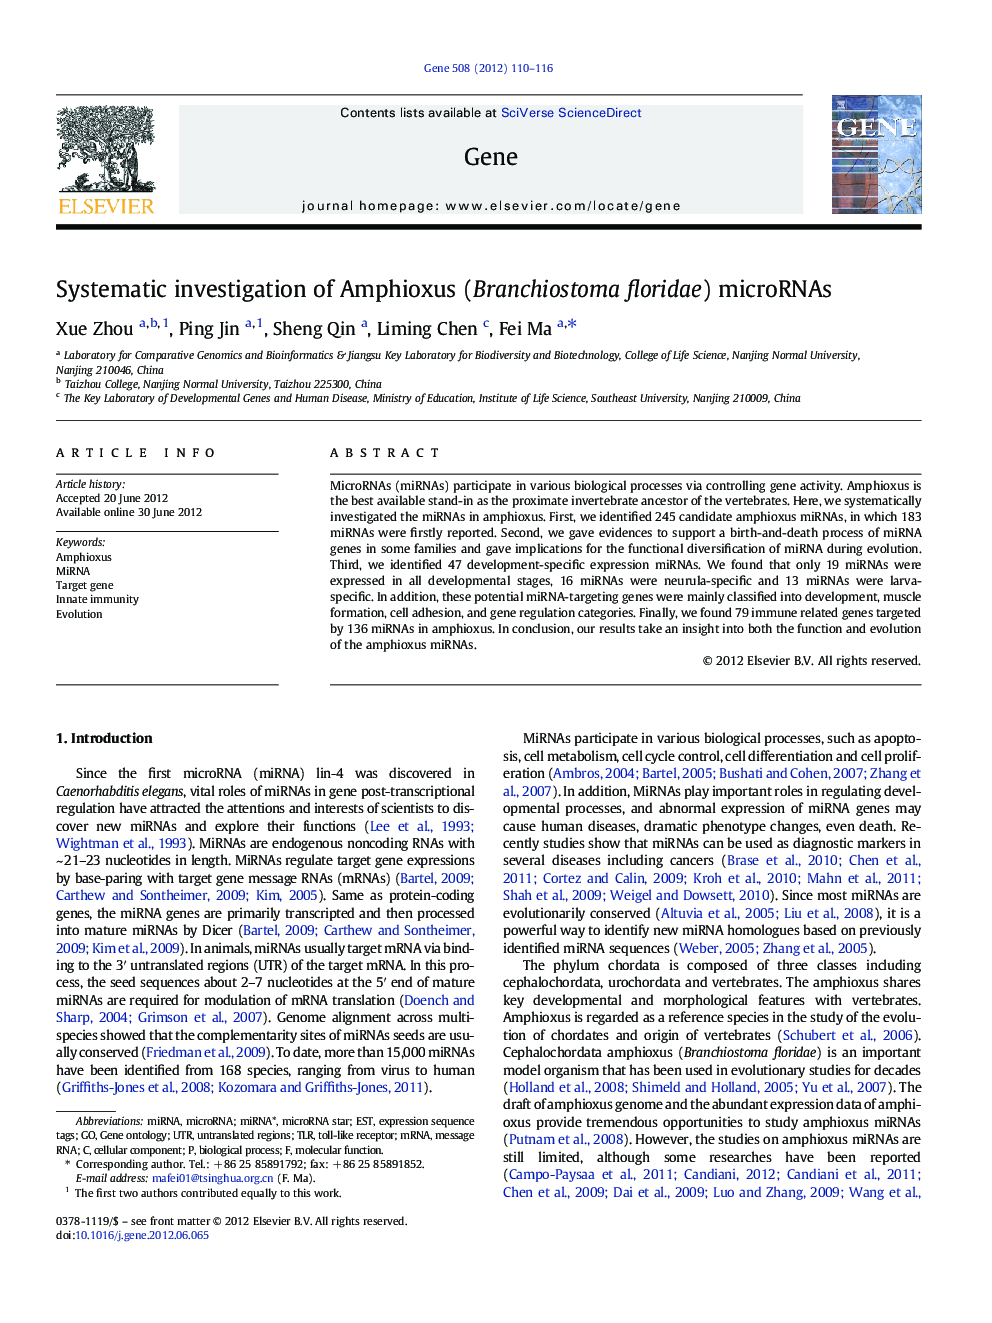 Systematic investigation of Amphioxus (Branchiostoma floridae) microRNAs